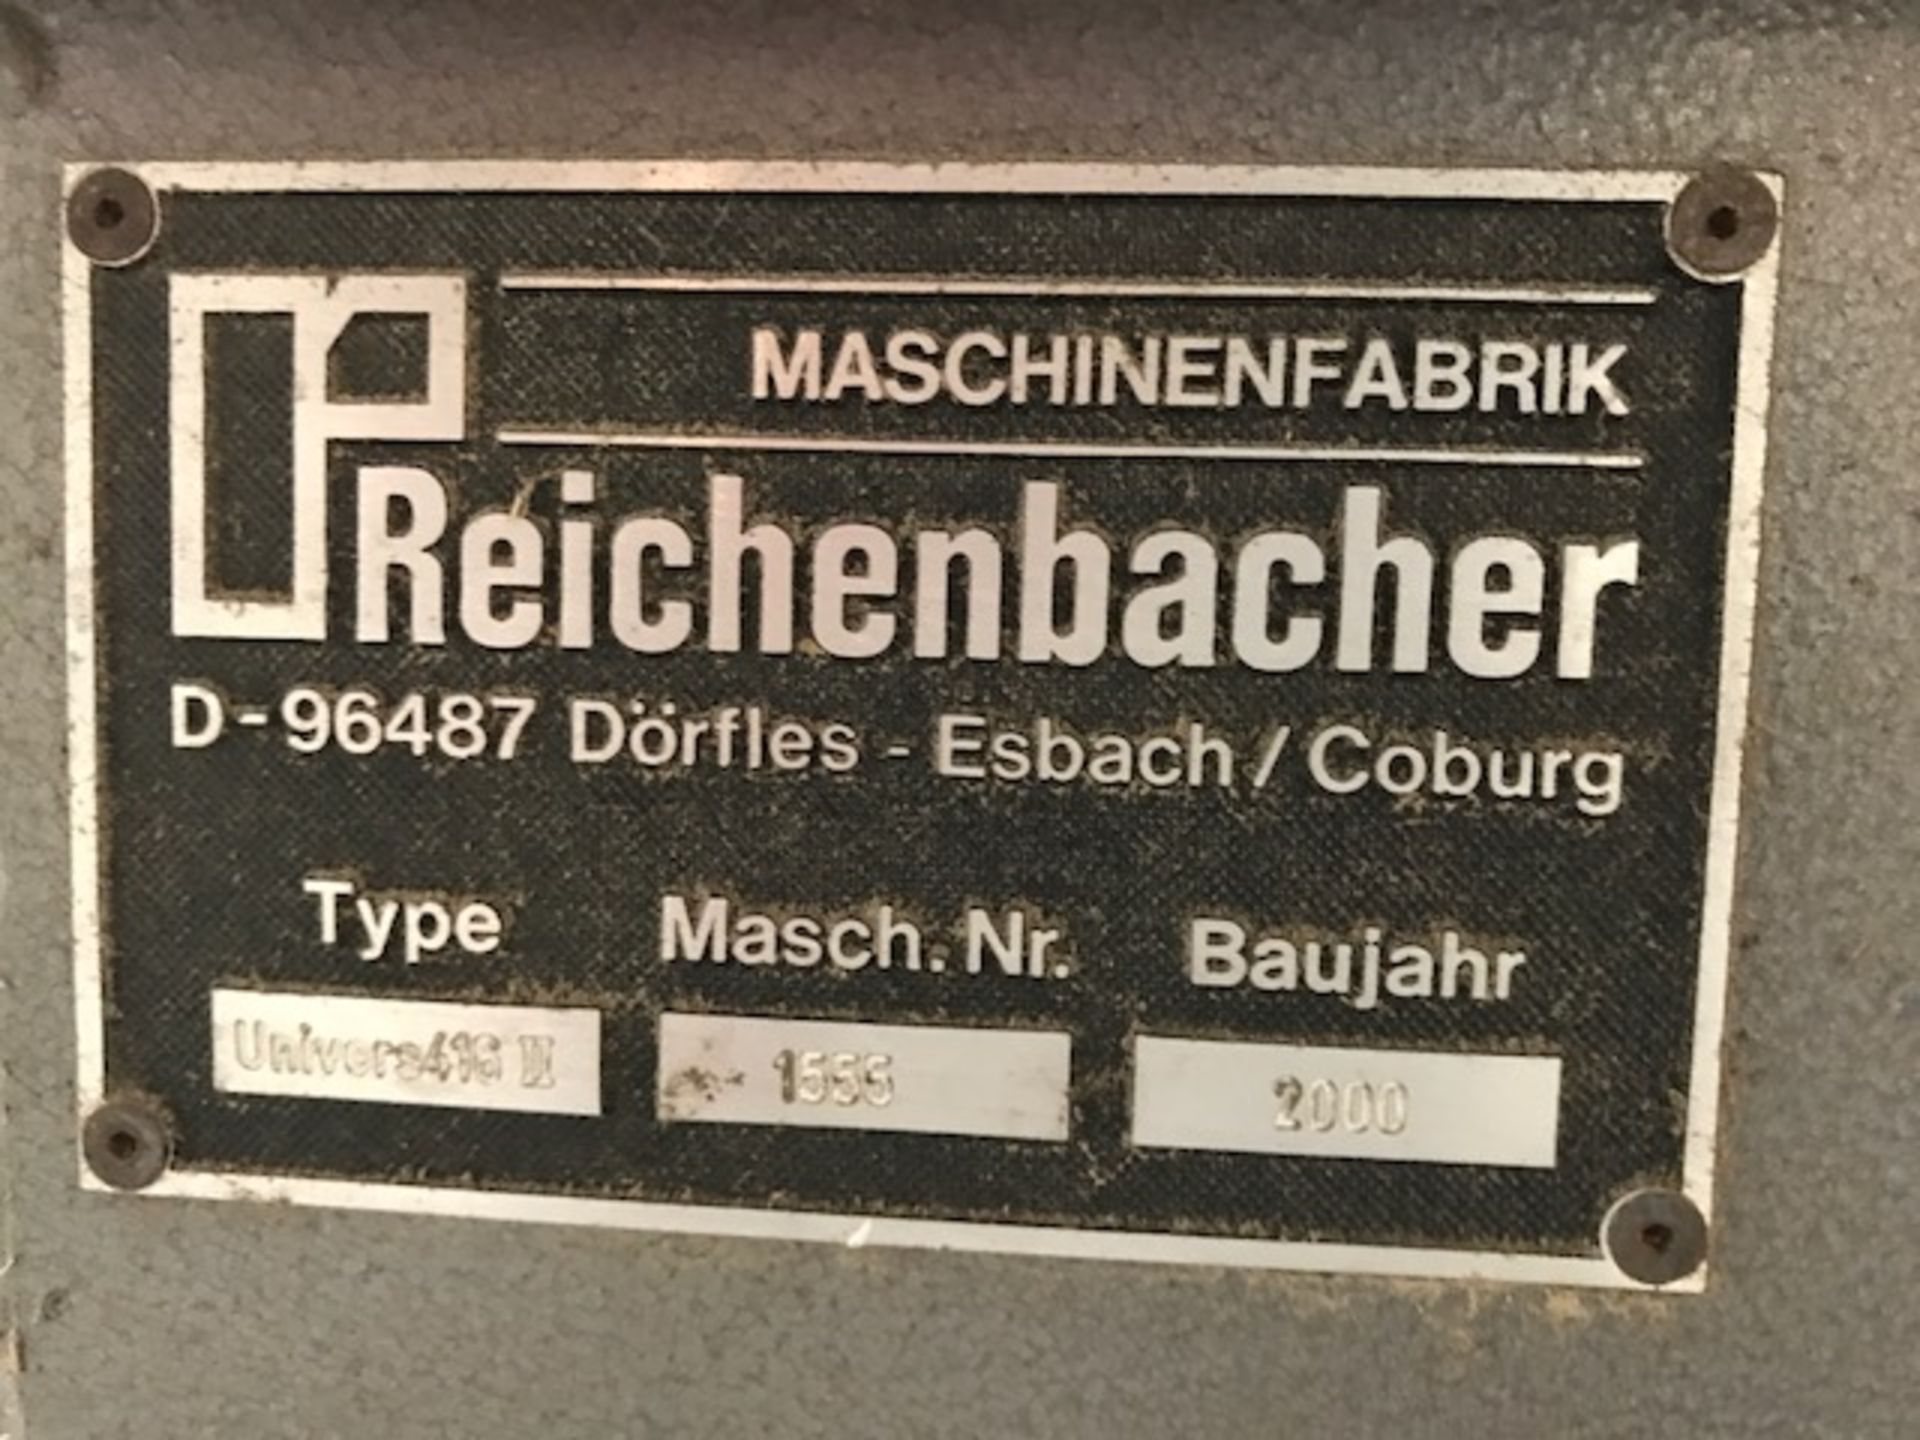 * 2000 Reichenbacher Type Univers 41611 CNC Router with Siemens Sinumerik CNC Control; S/N: 1555; - Image 5 of 6